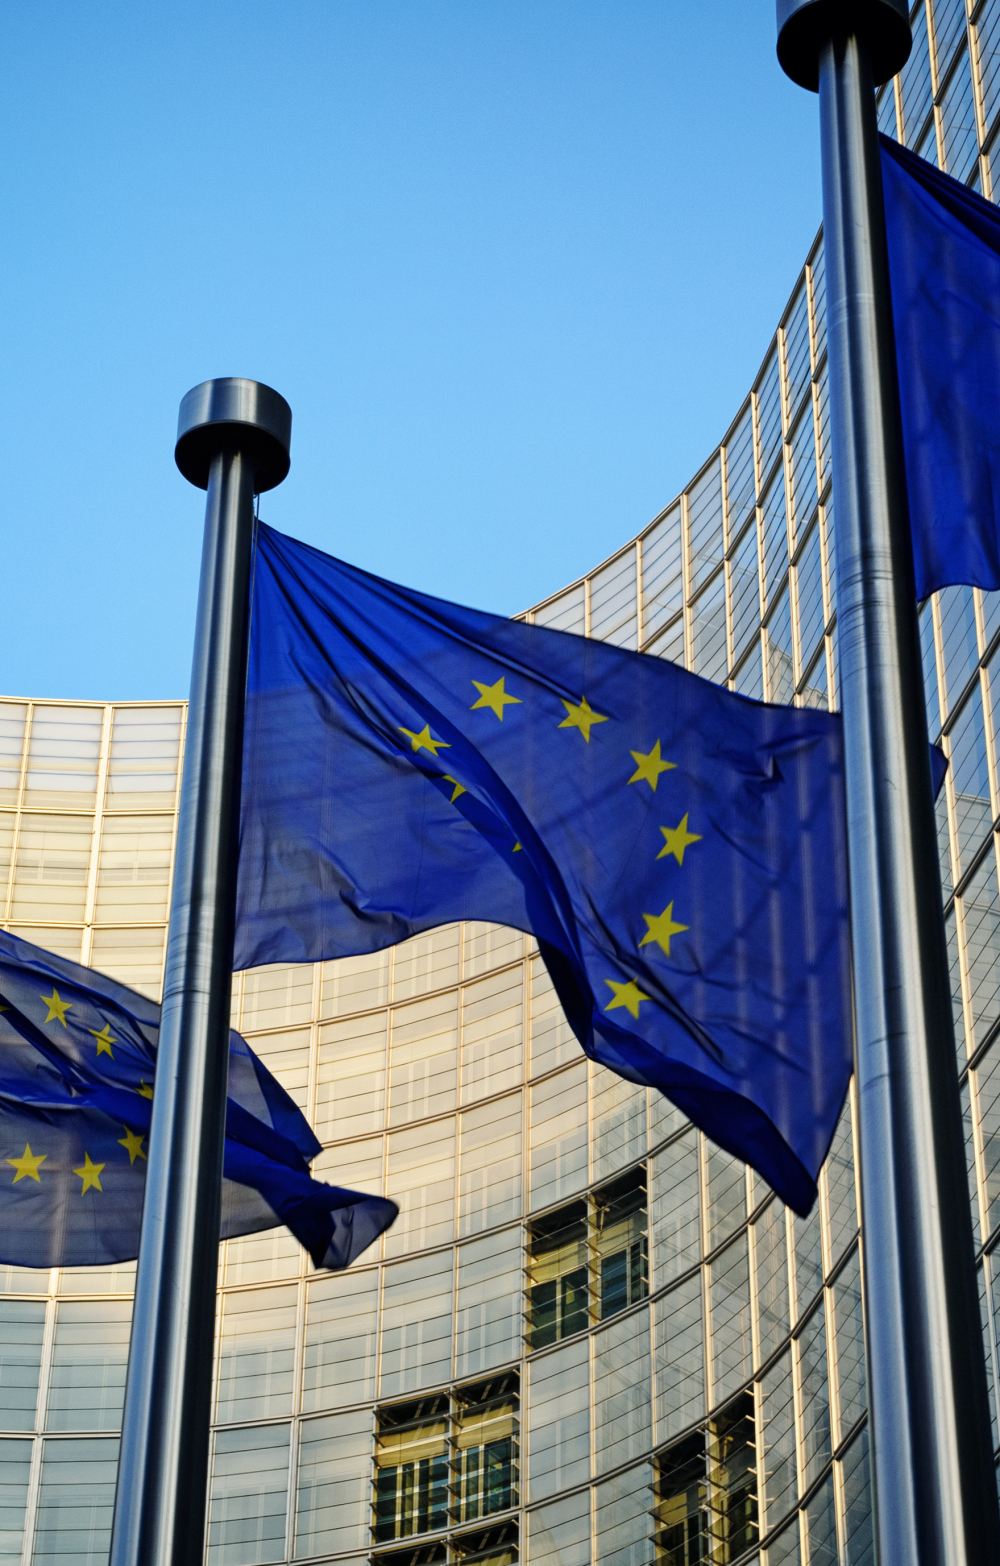 European Commission and EU flags